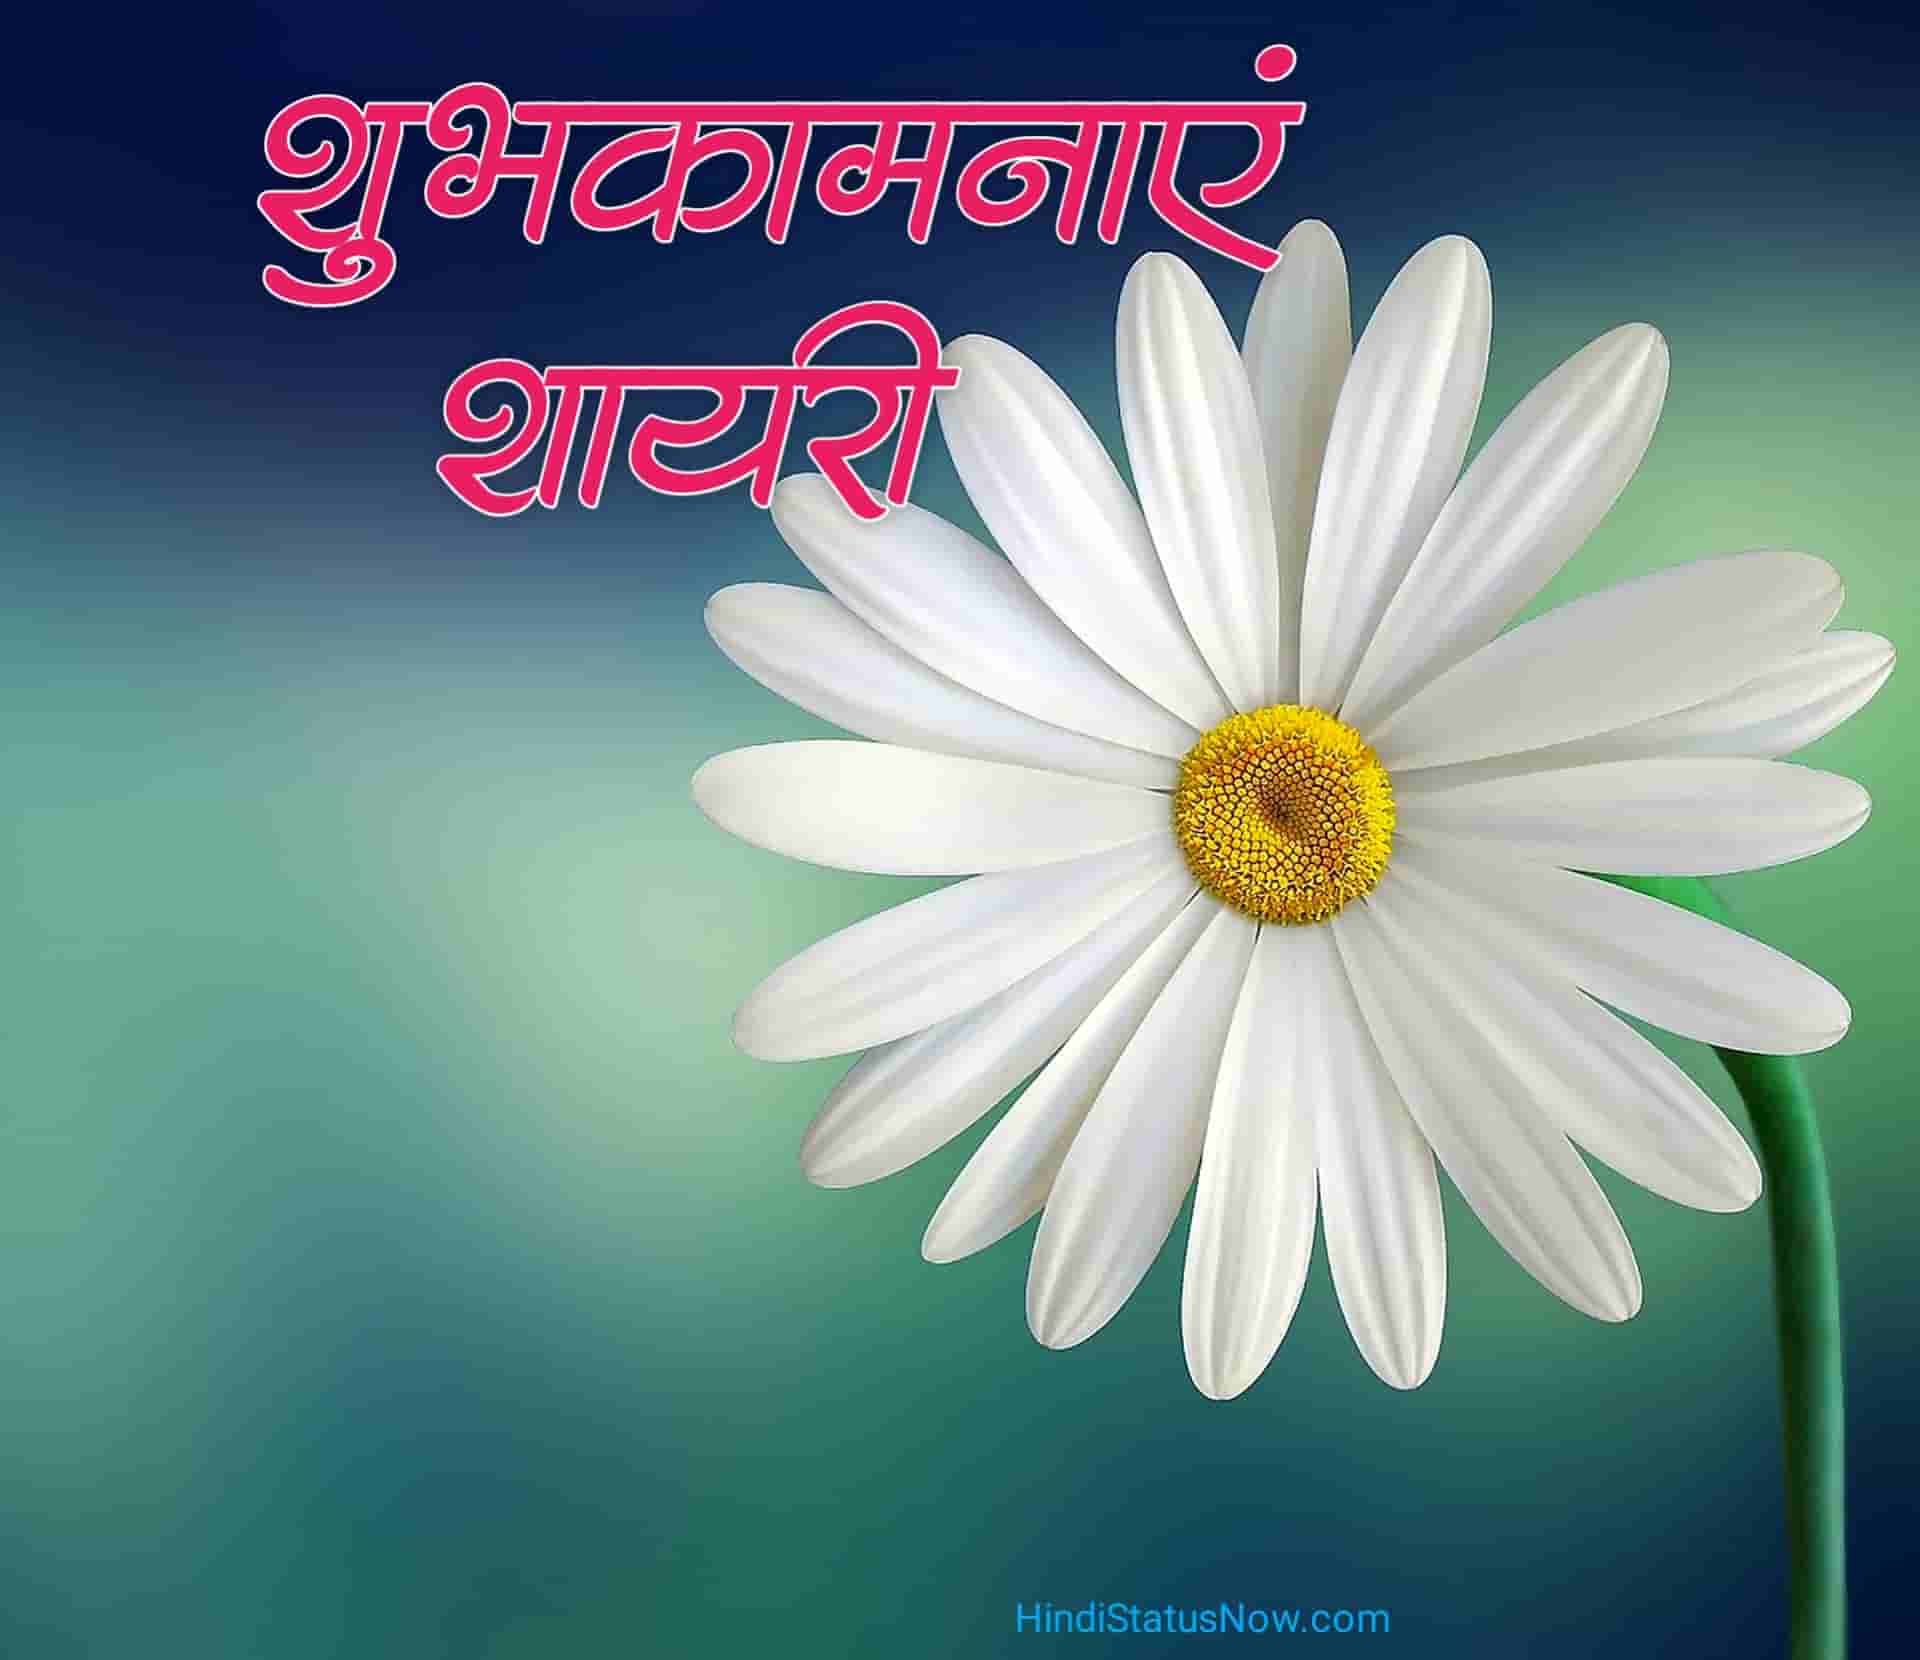 शुभकामनाएं शायरी | Best Wishes Shayari In Hindi